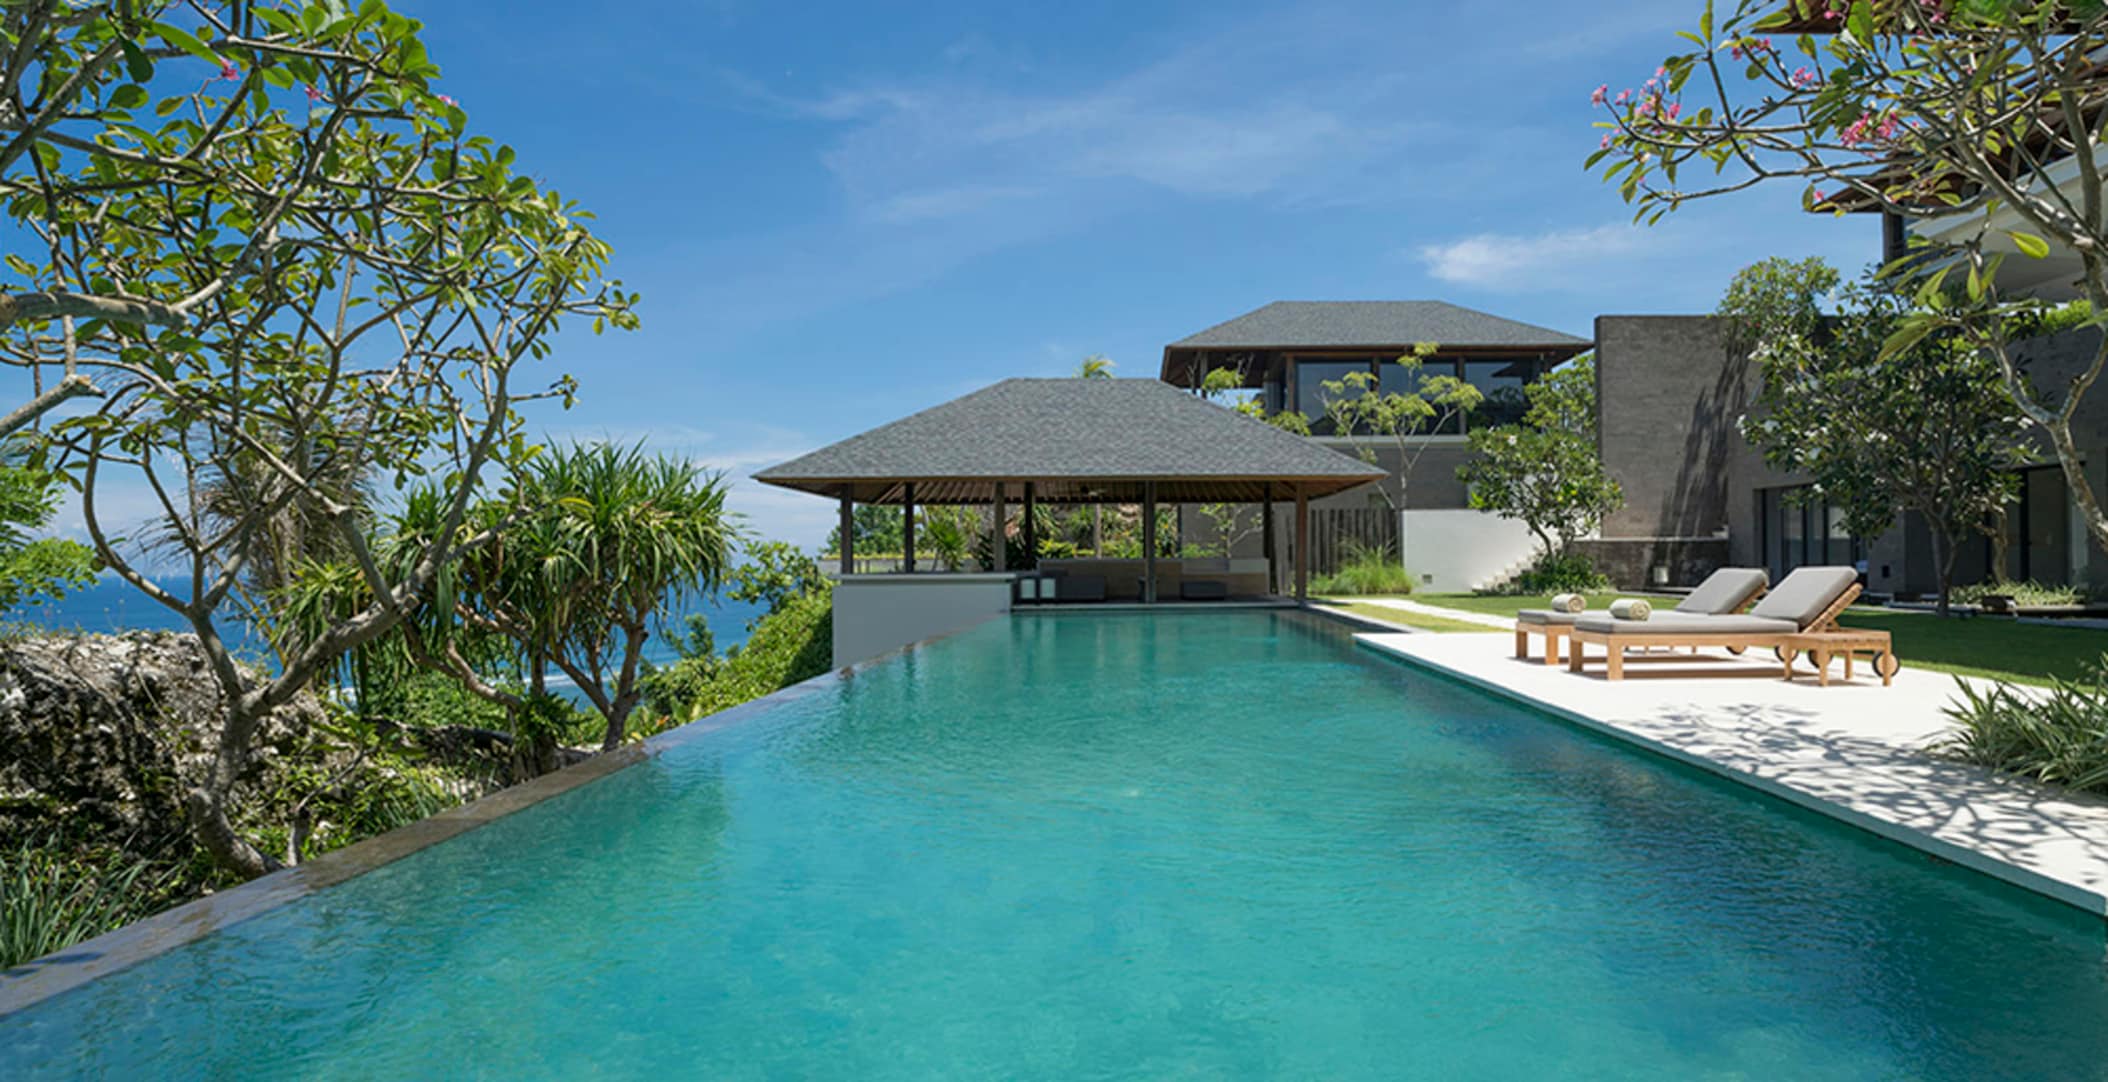 Property Image 1 - 5 Bedroom Villa in Bali 